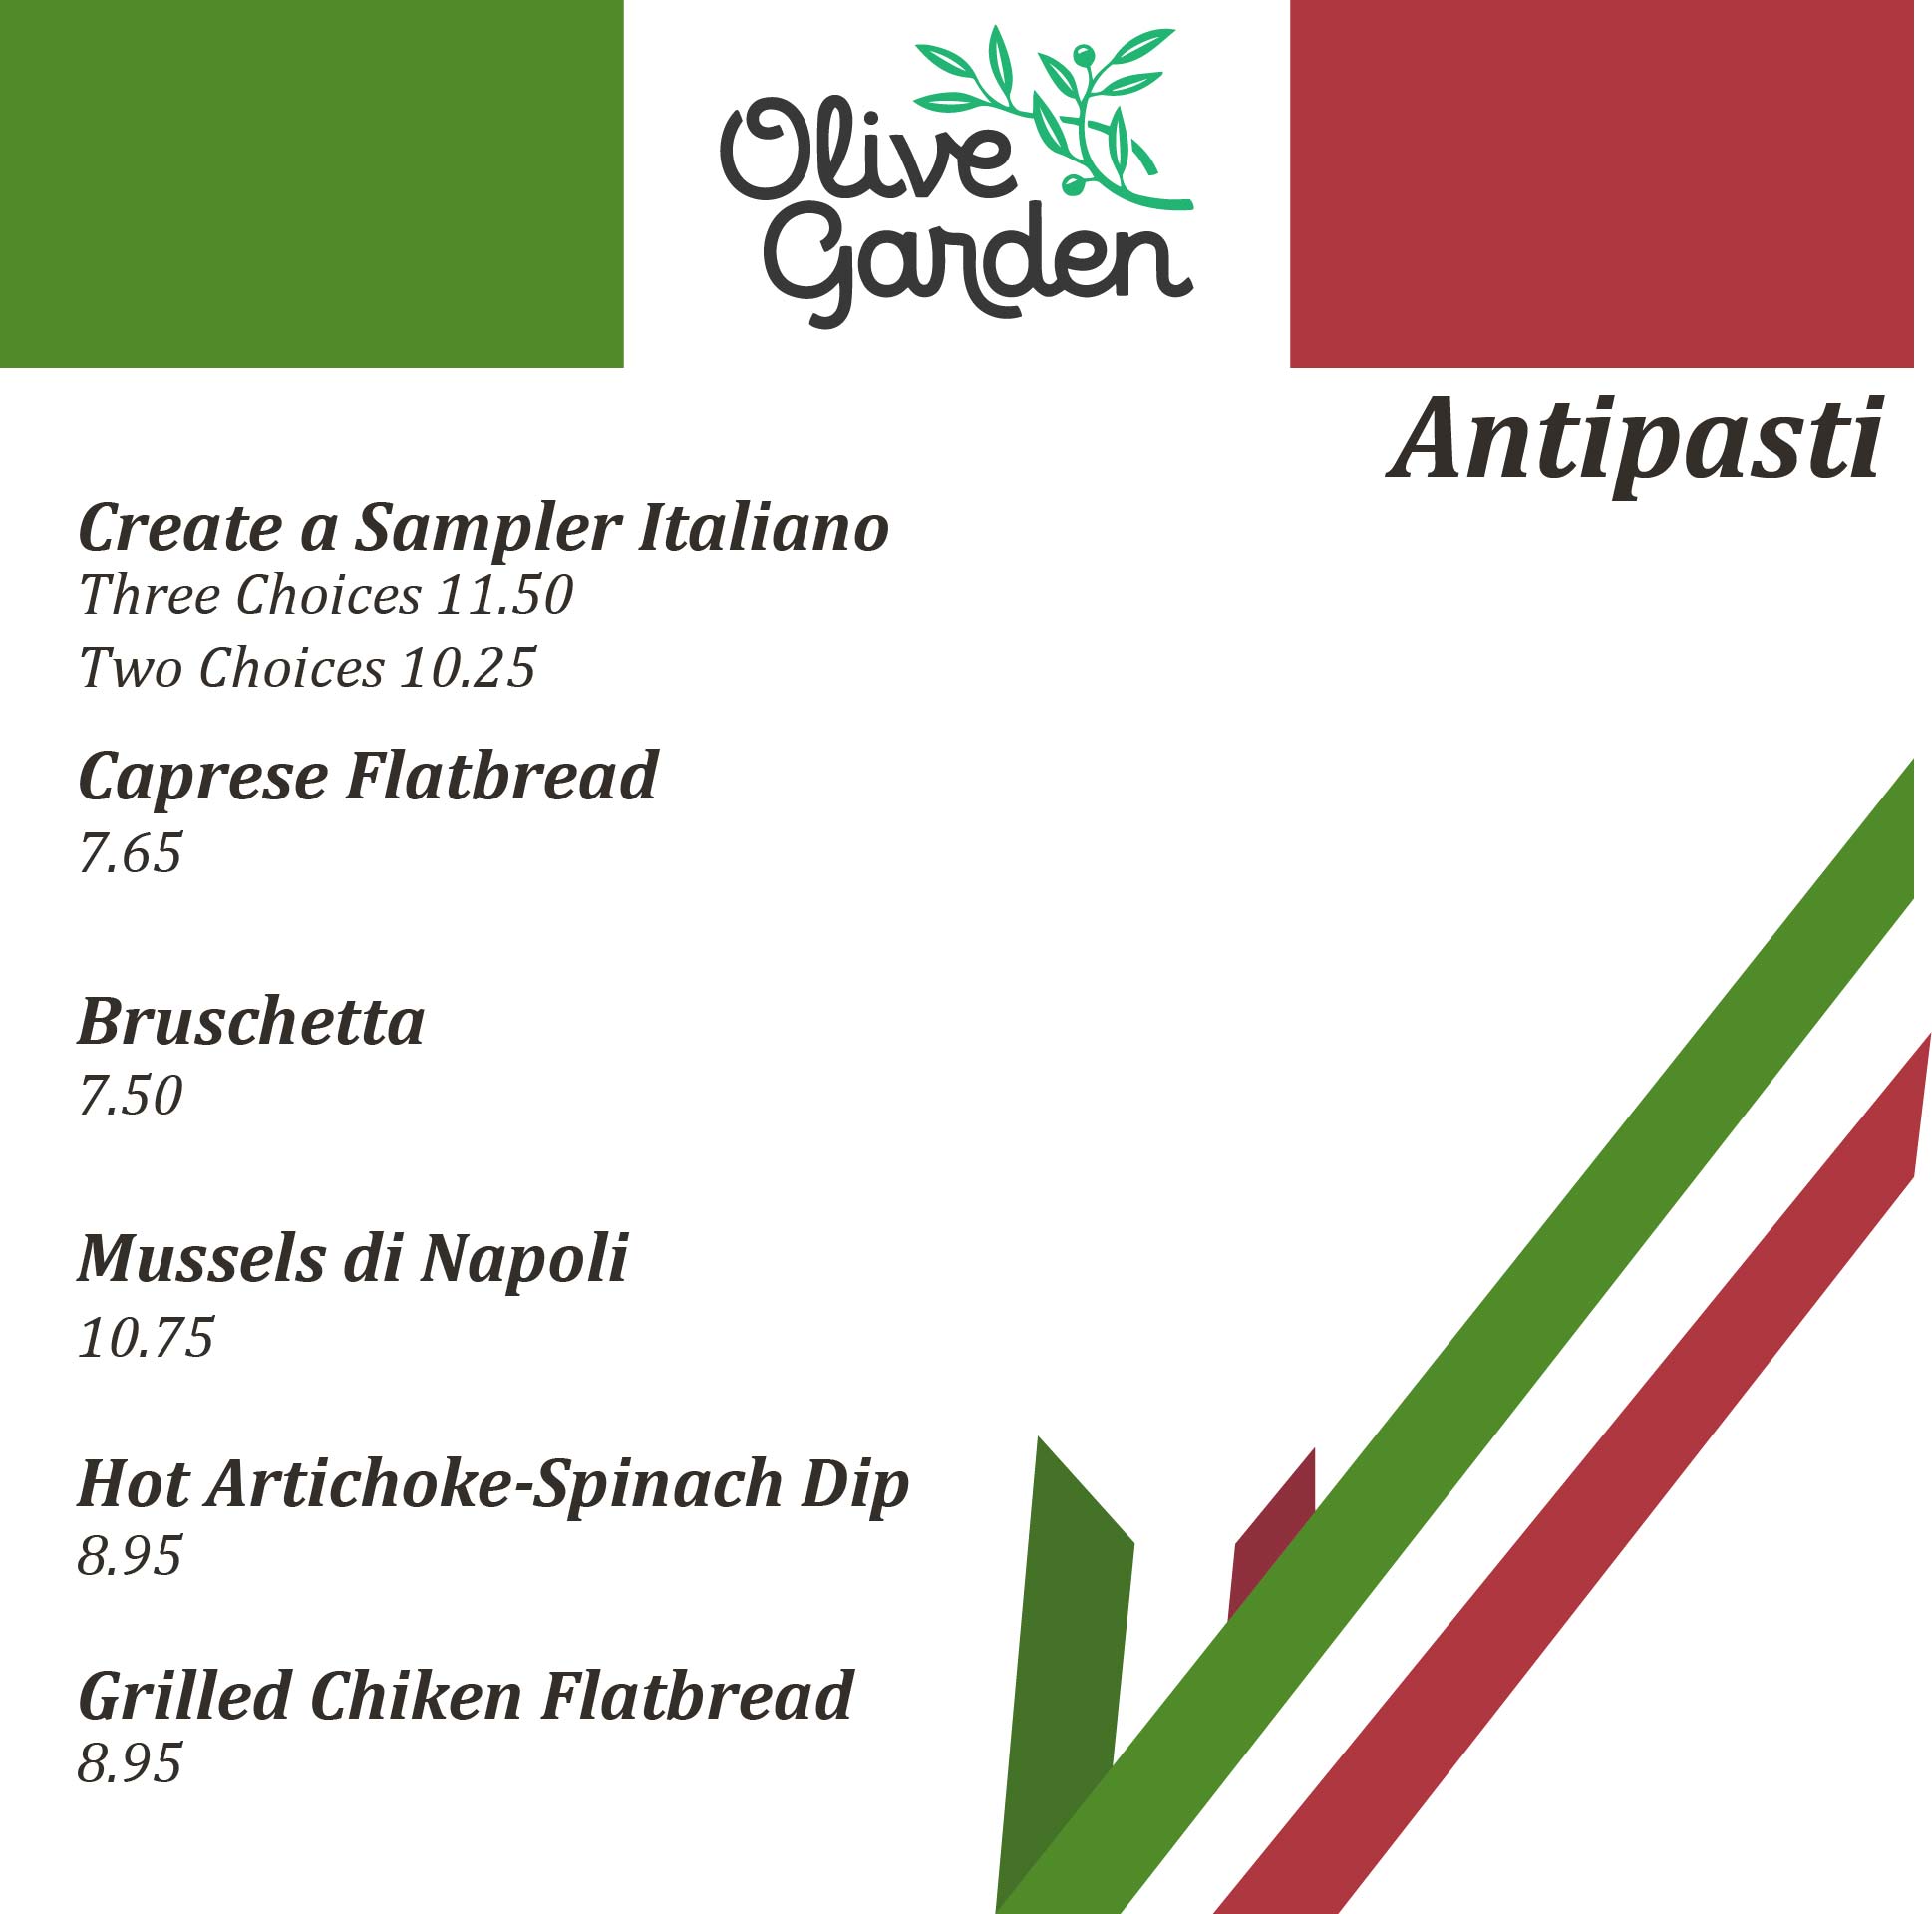 Olive garden canada menu - Animal boarding near me